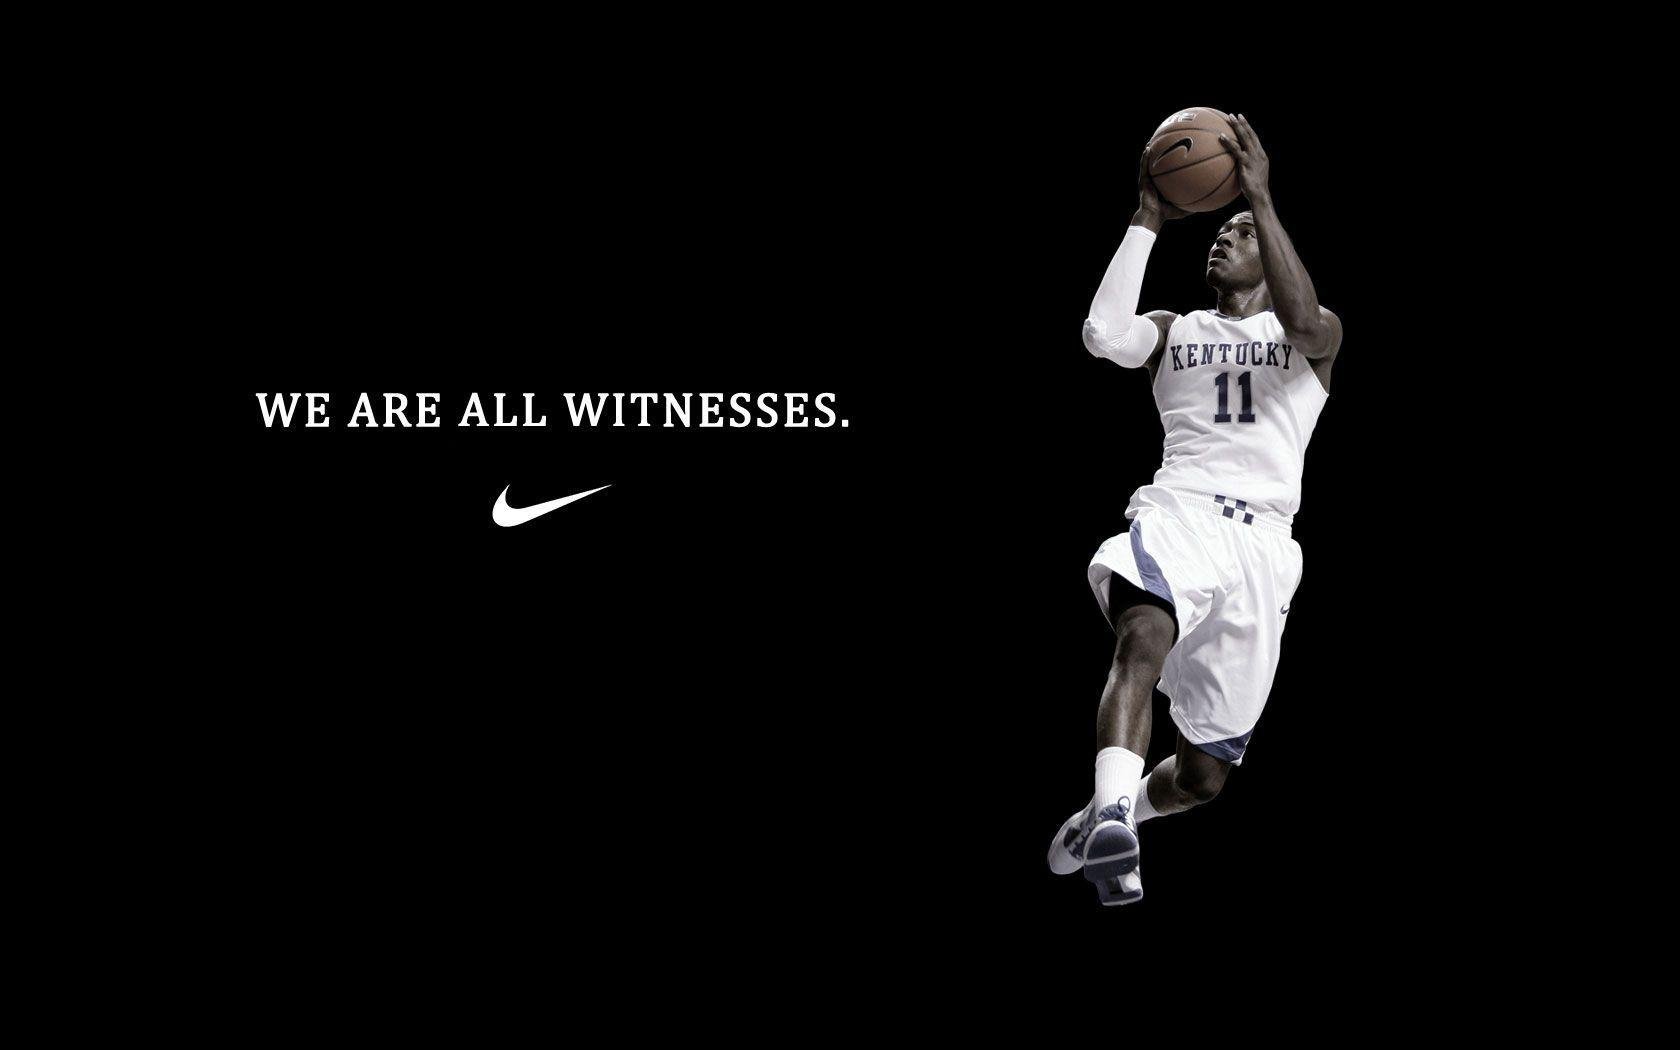 Wallpaper For > Nike Wallpaper Basketball Kevin Durant